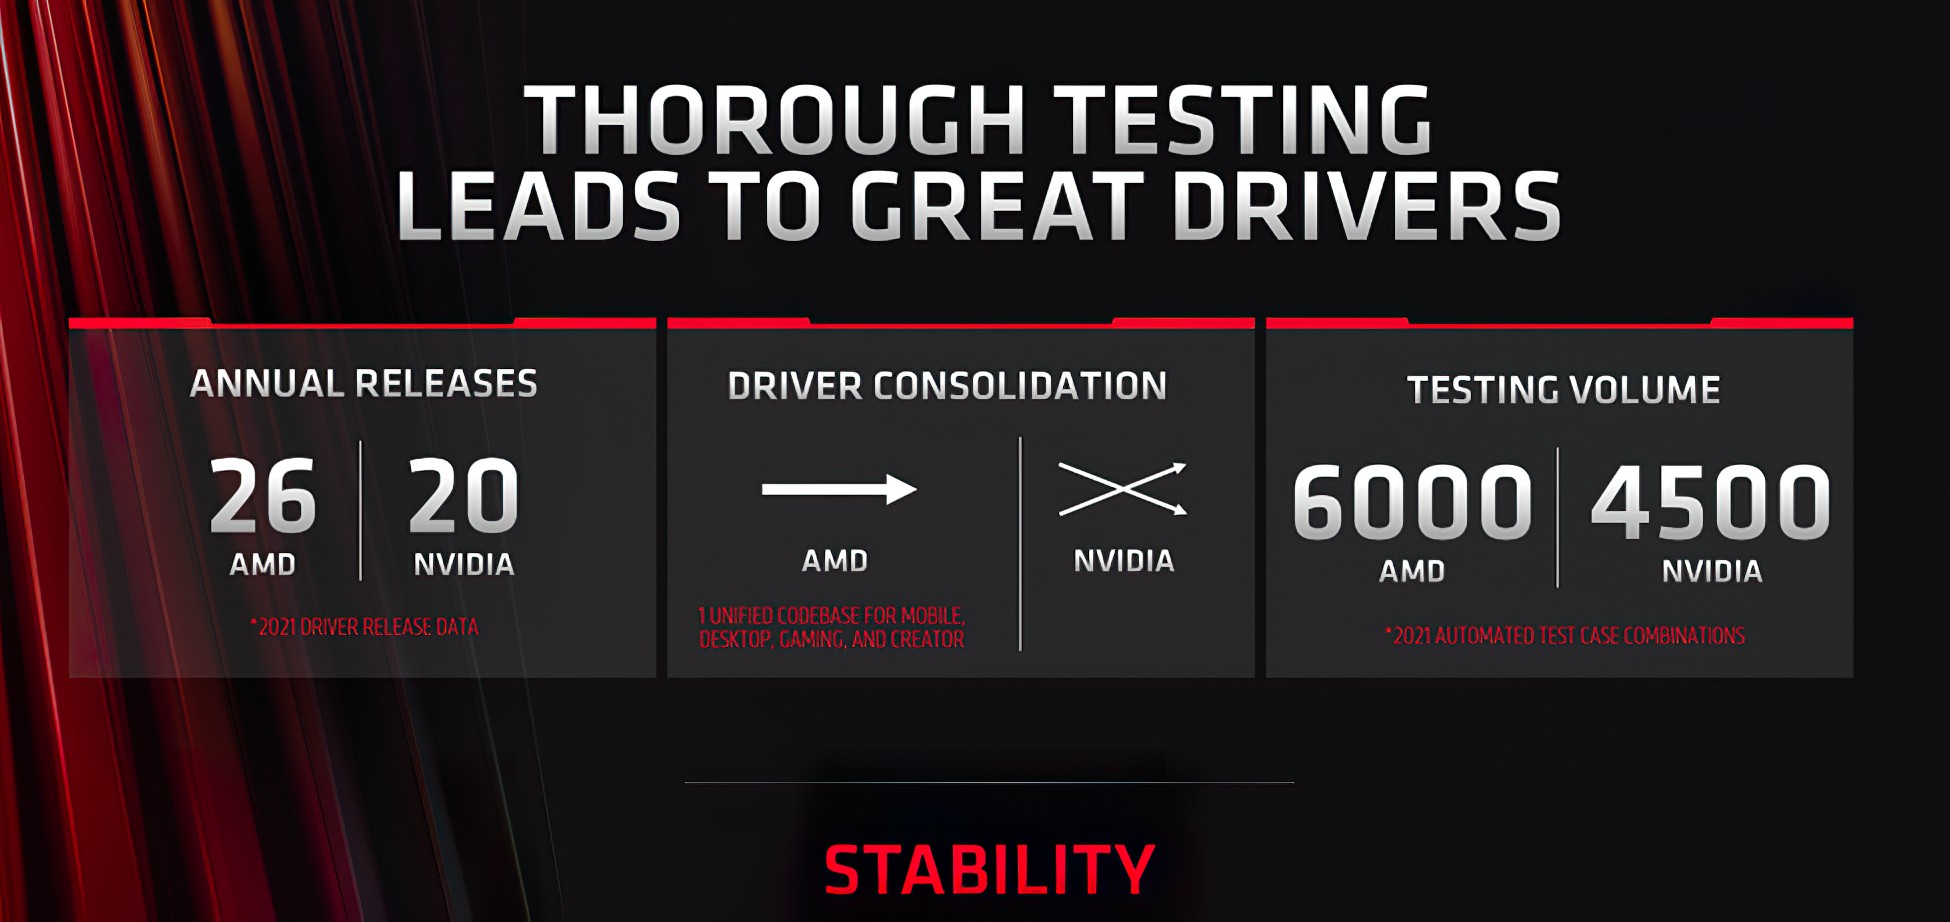 AMD-DRIVERS.jpg